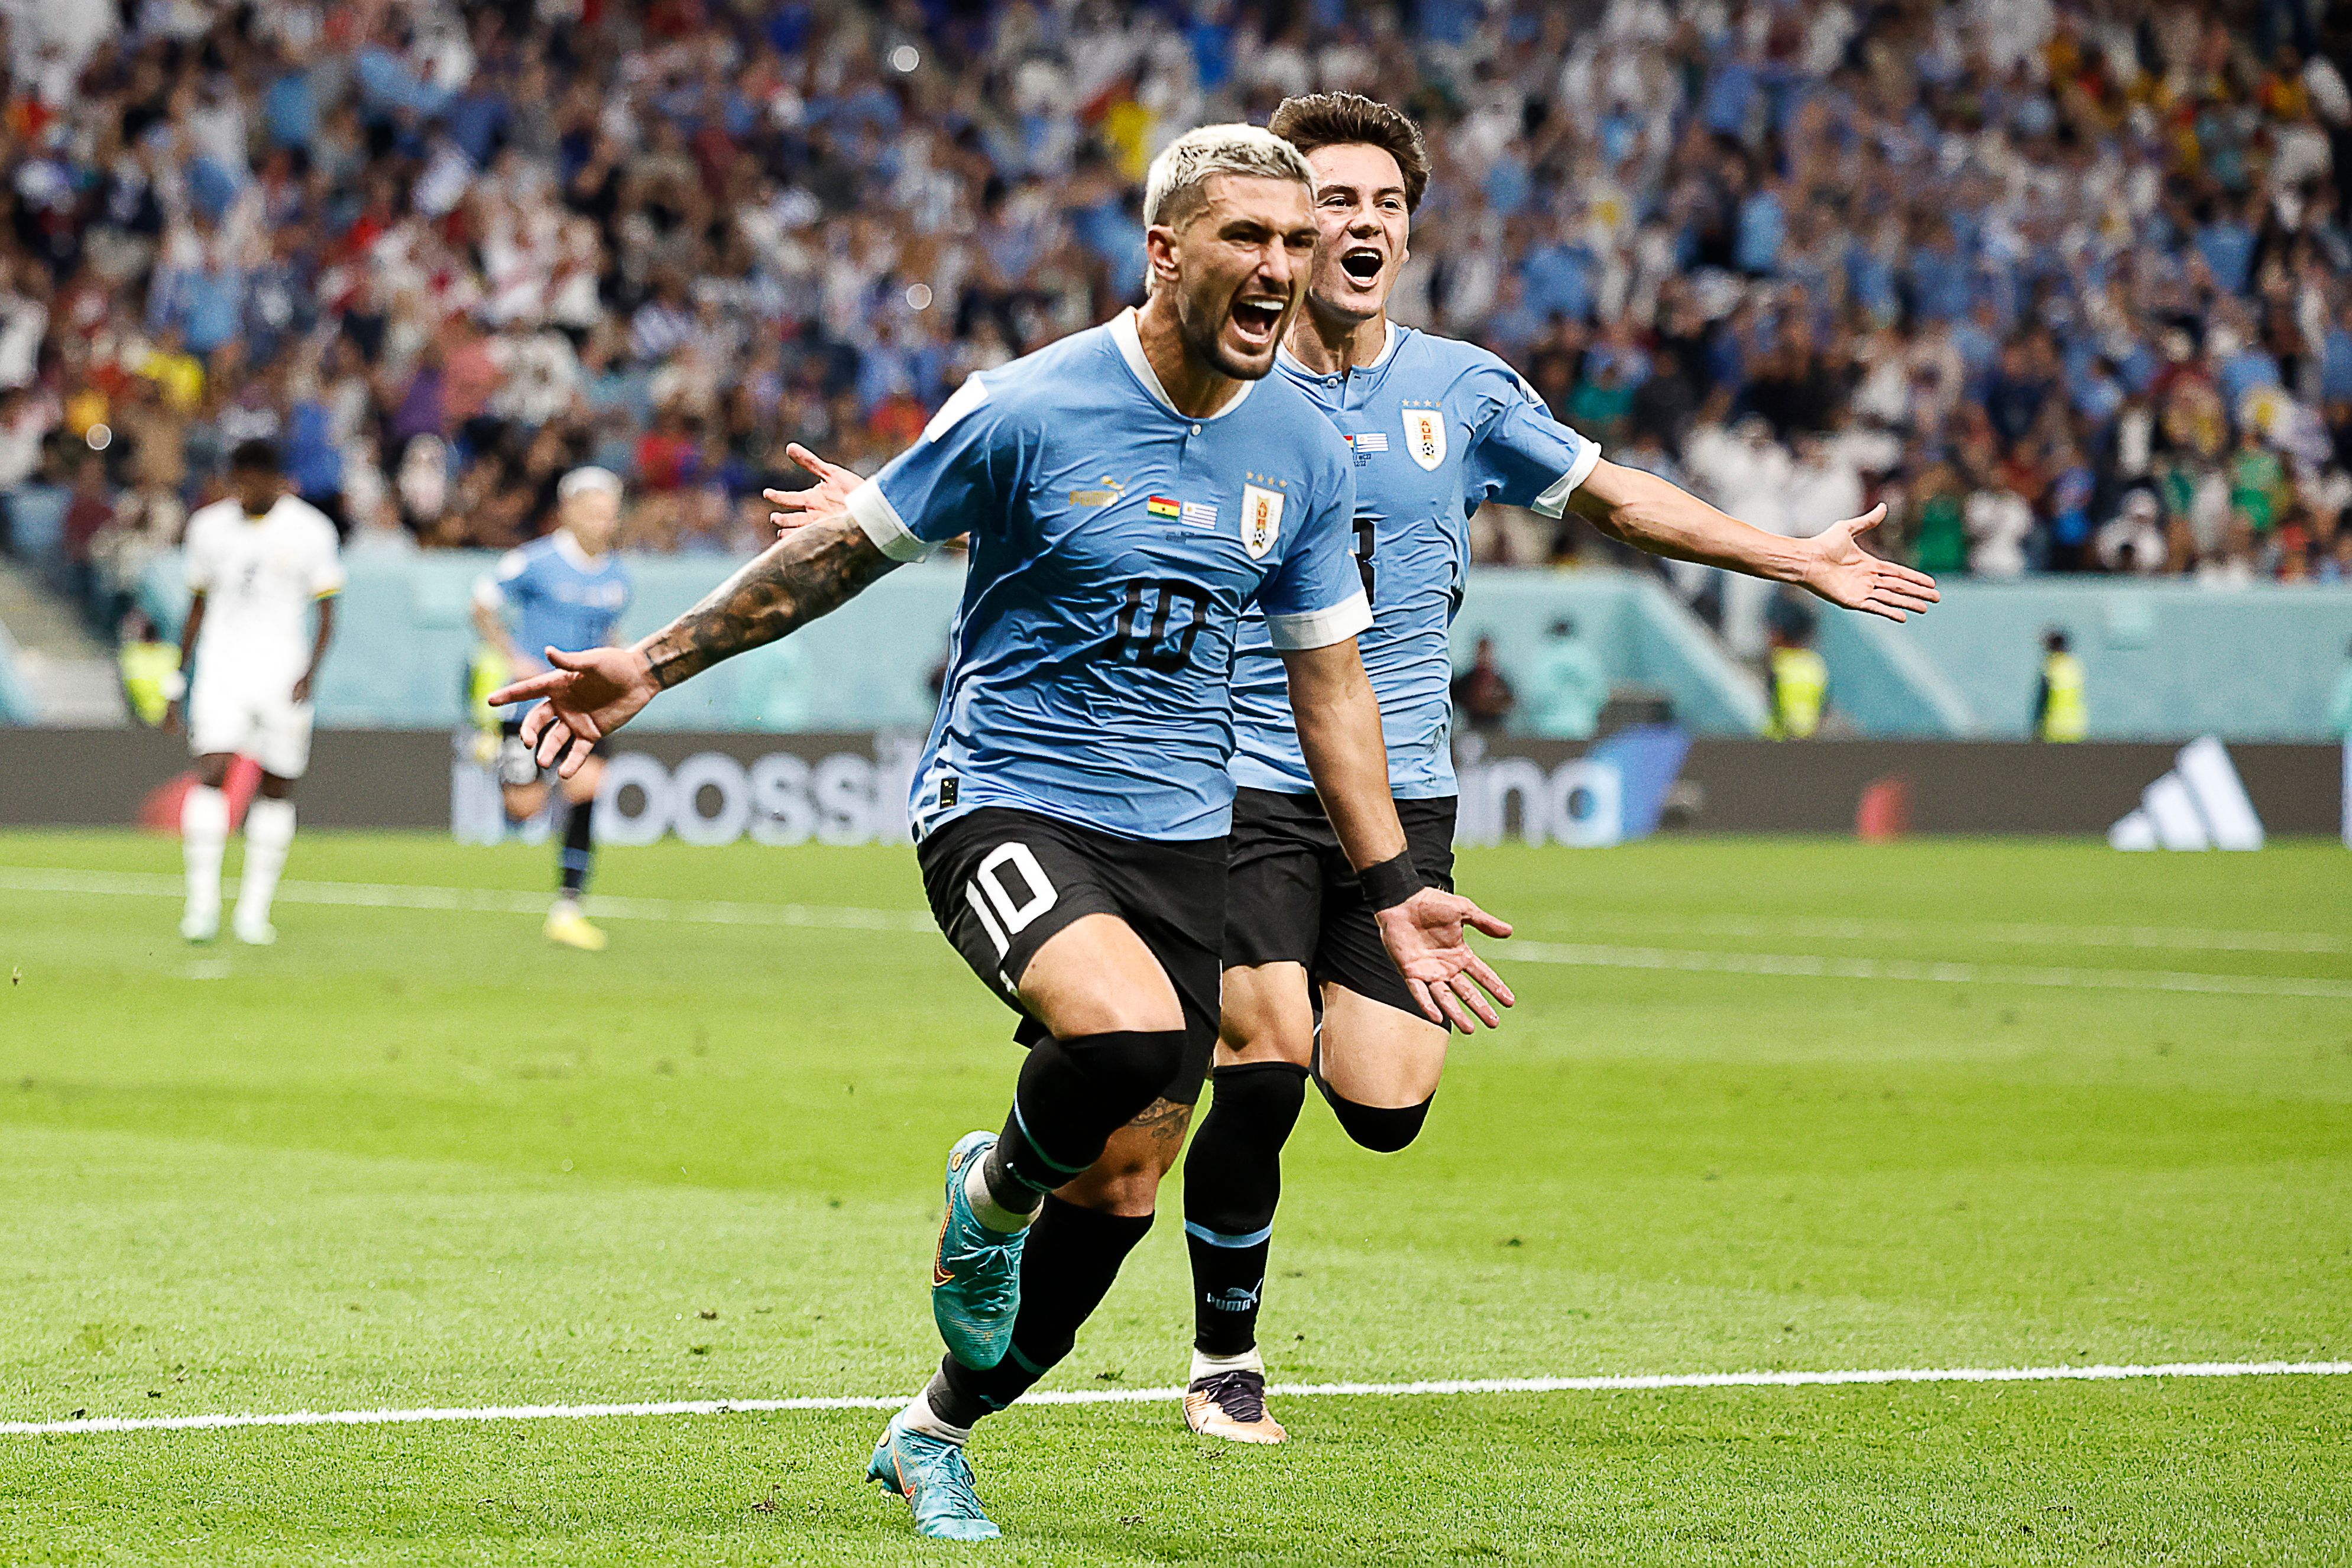 Modo Deporte - • Fútbol ⚽ Campeonato Uruguayo 🇺🇾 Hoy